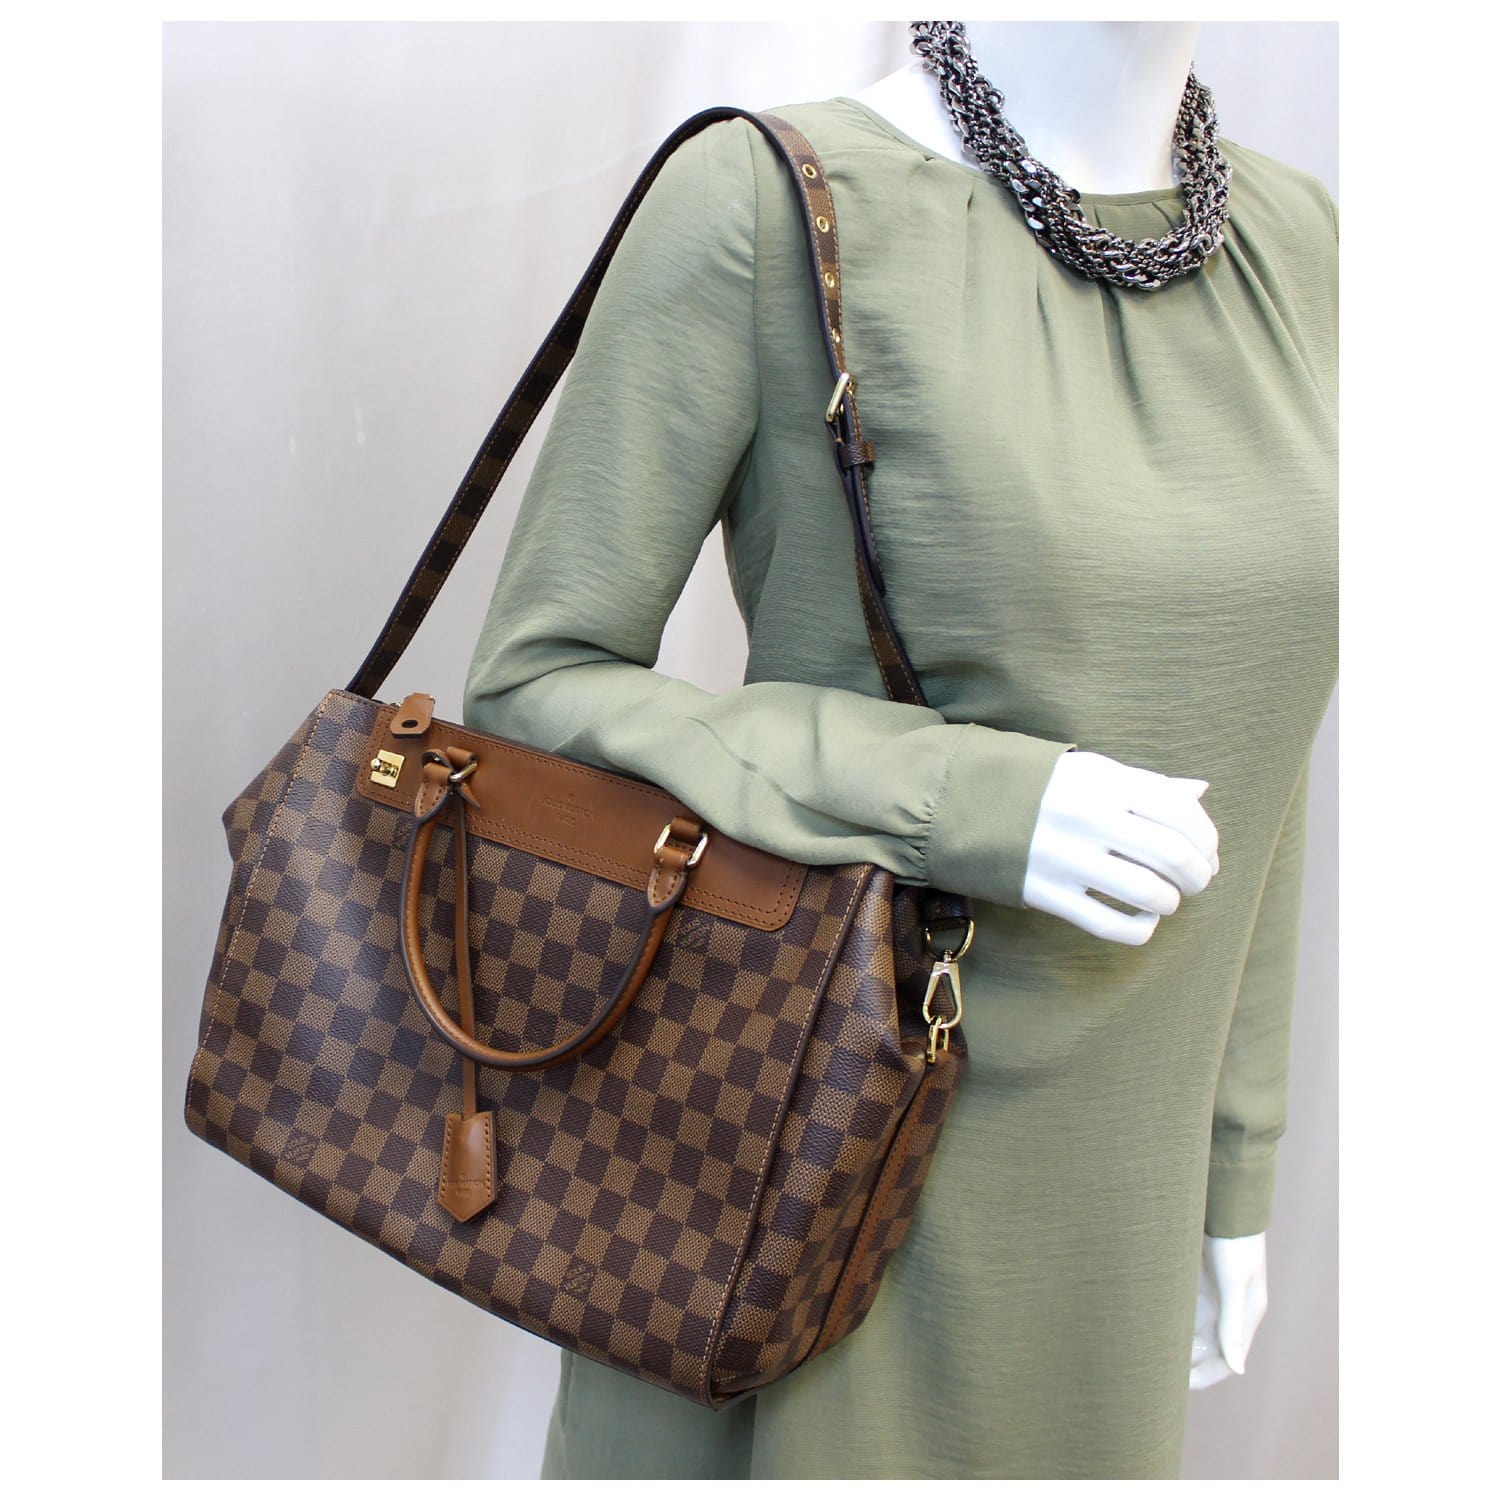 Louis Vuitton Damier Ebene Medium Buckle Handbags & Bags for Women